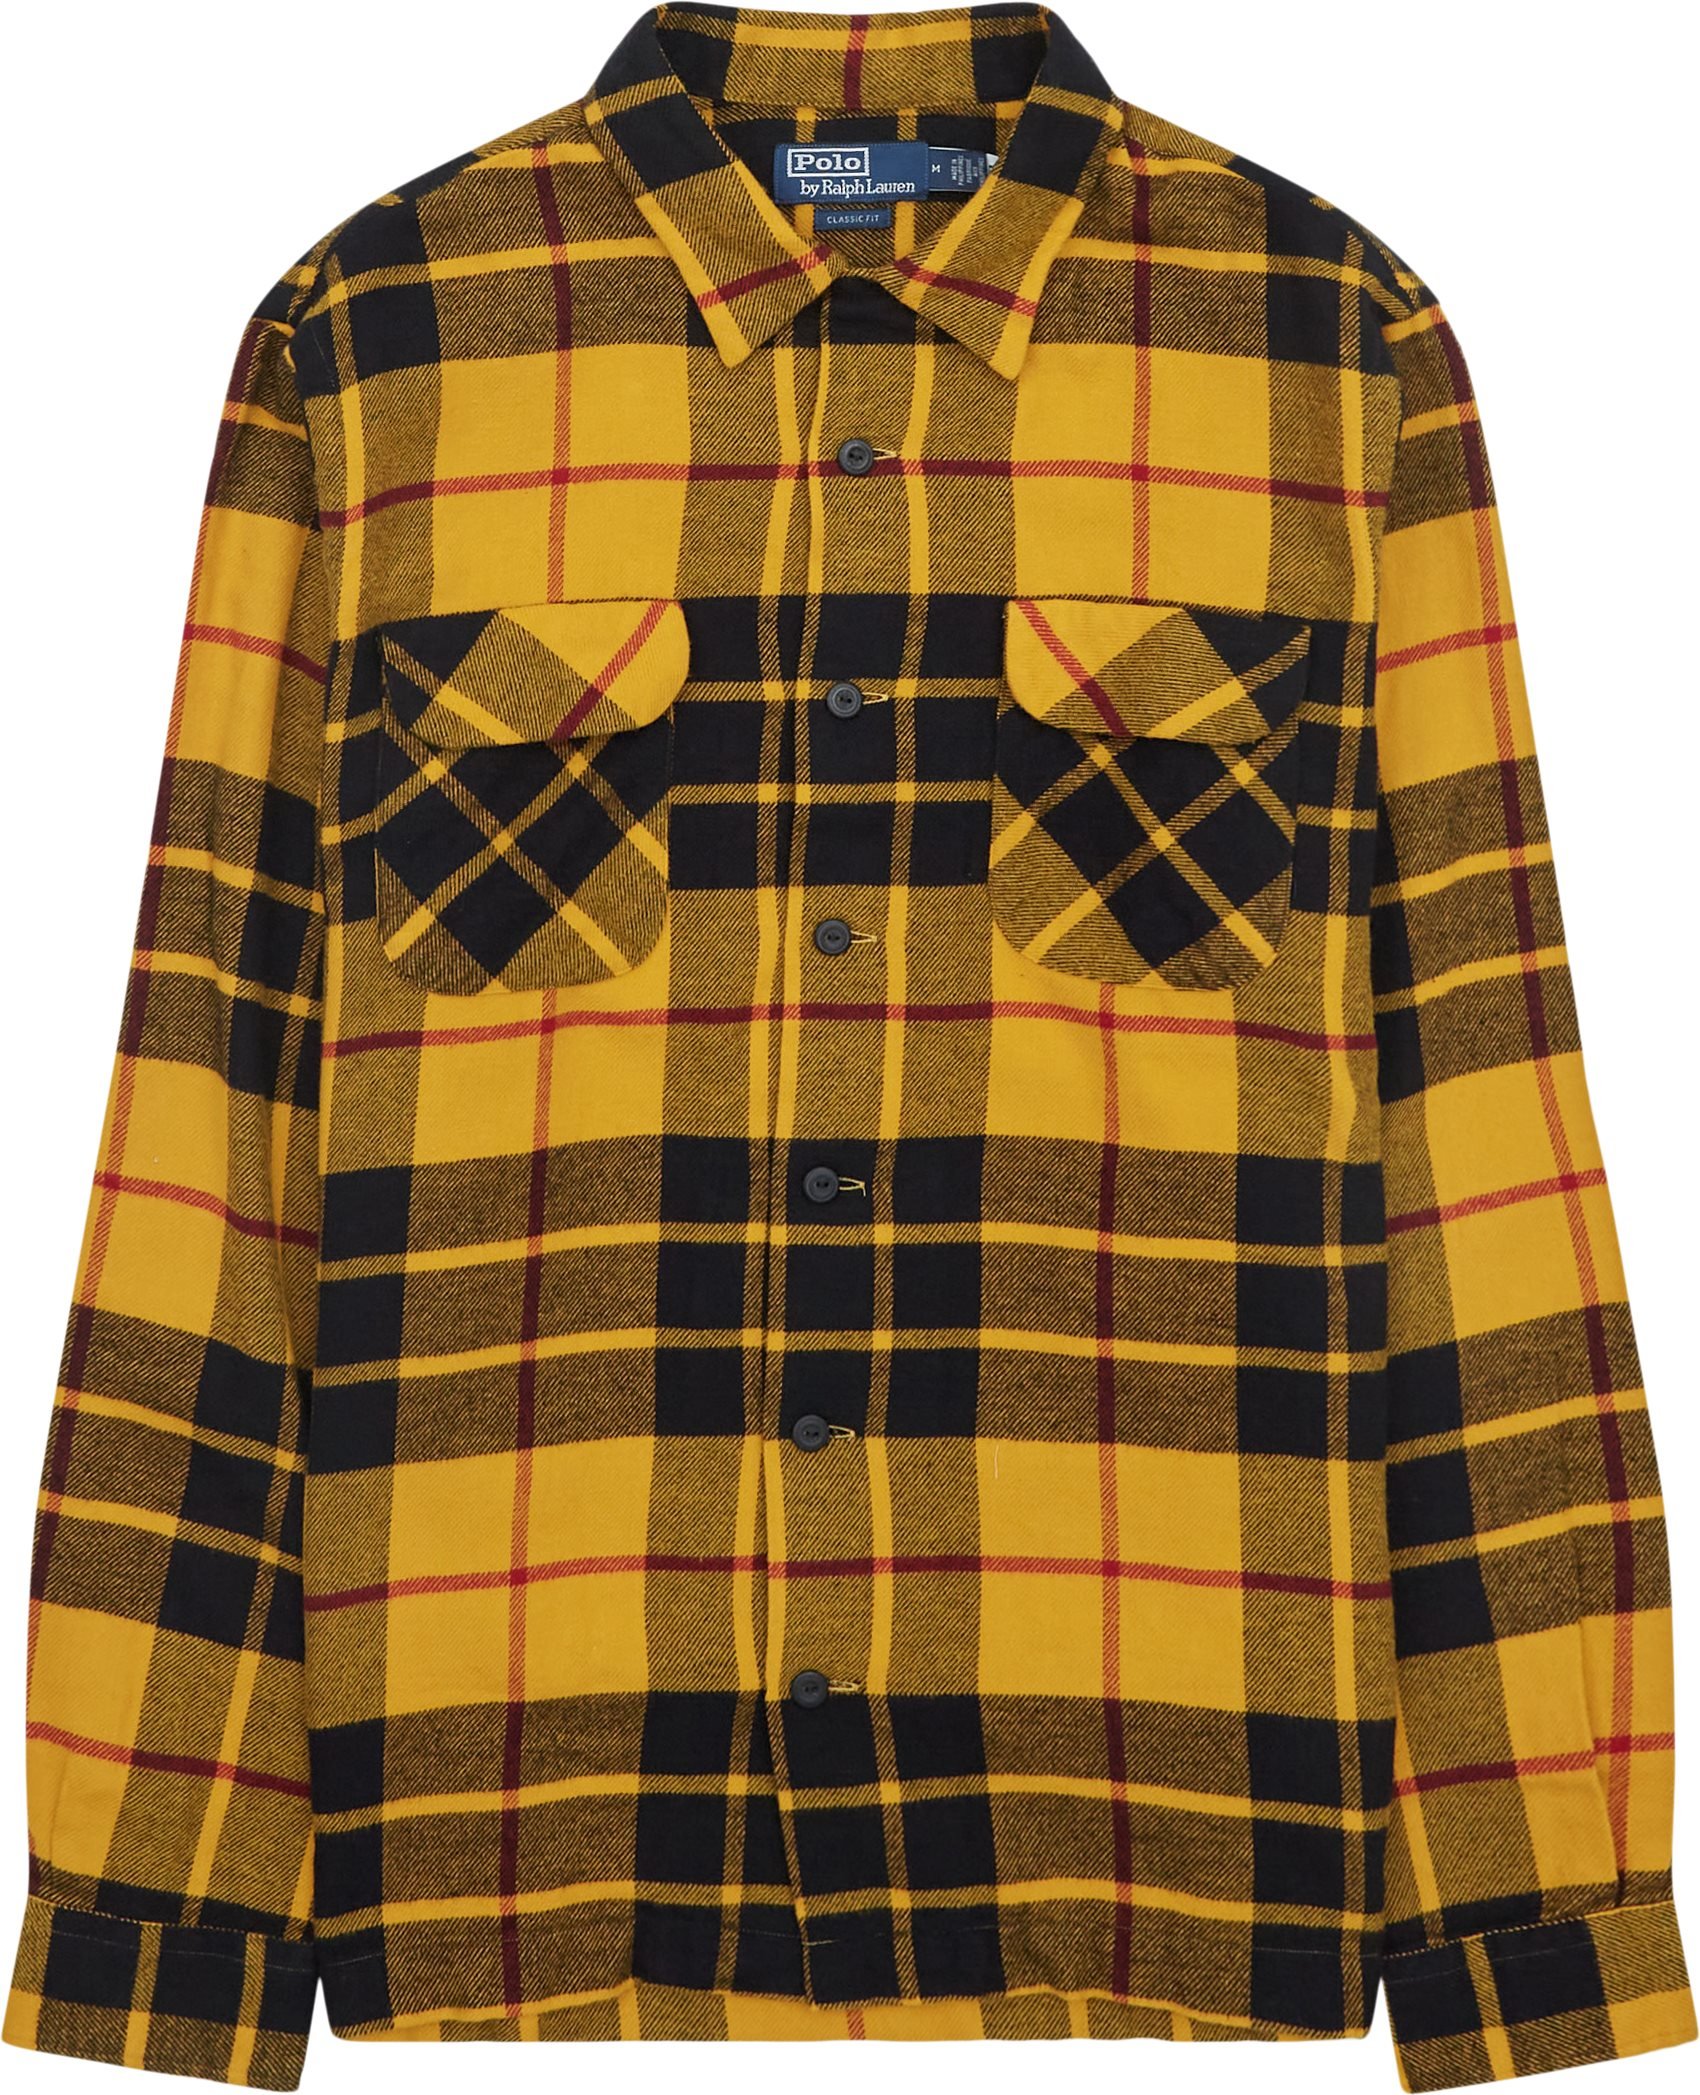 Polo Ralph Lauren Shirts 710881862 Yellow